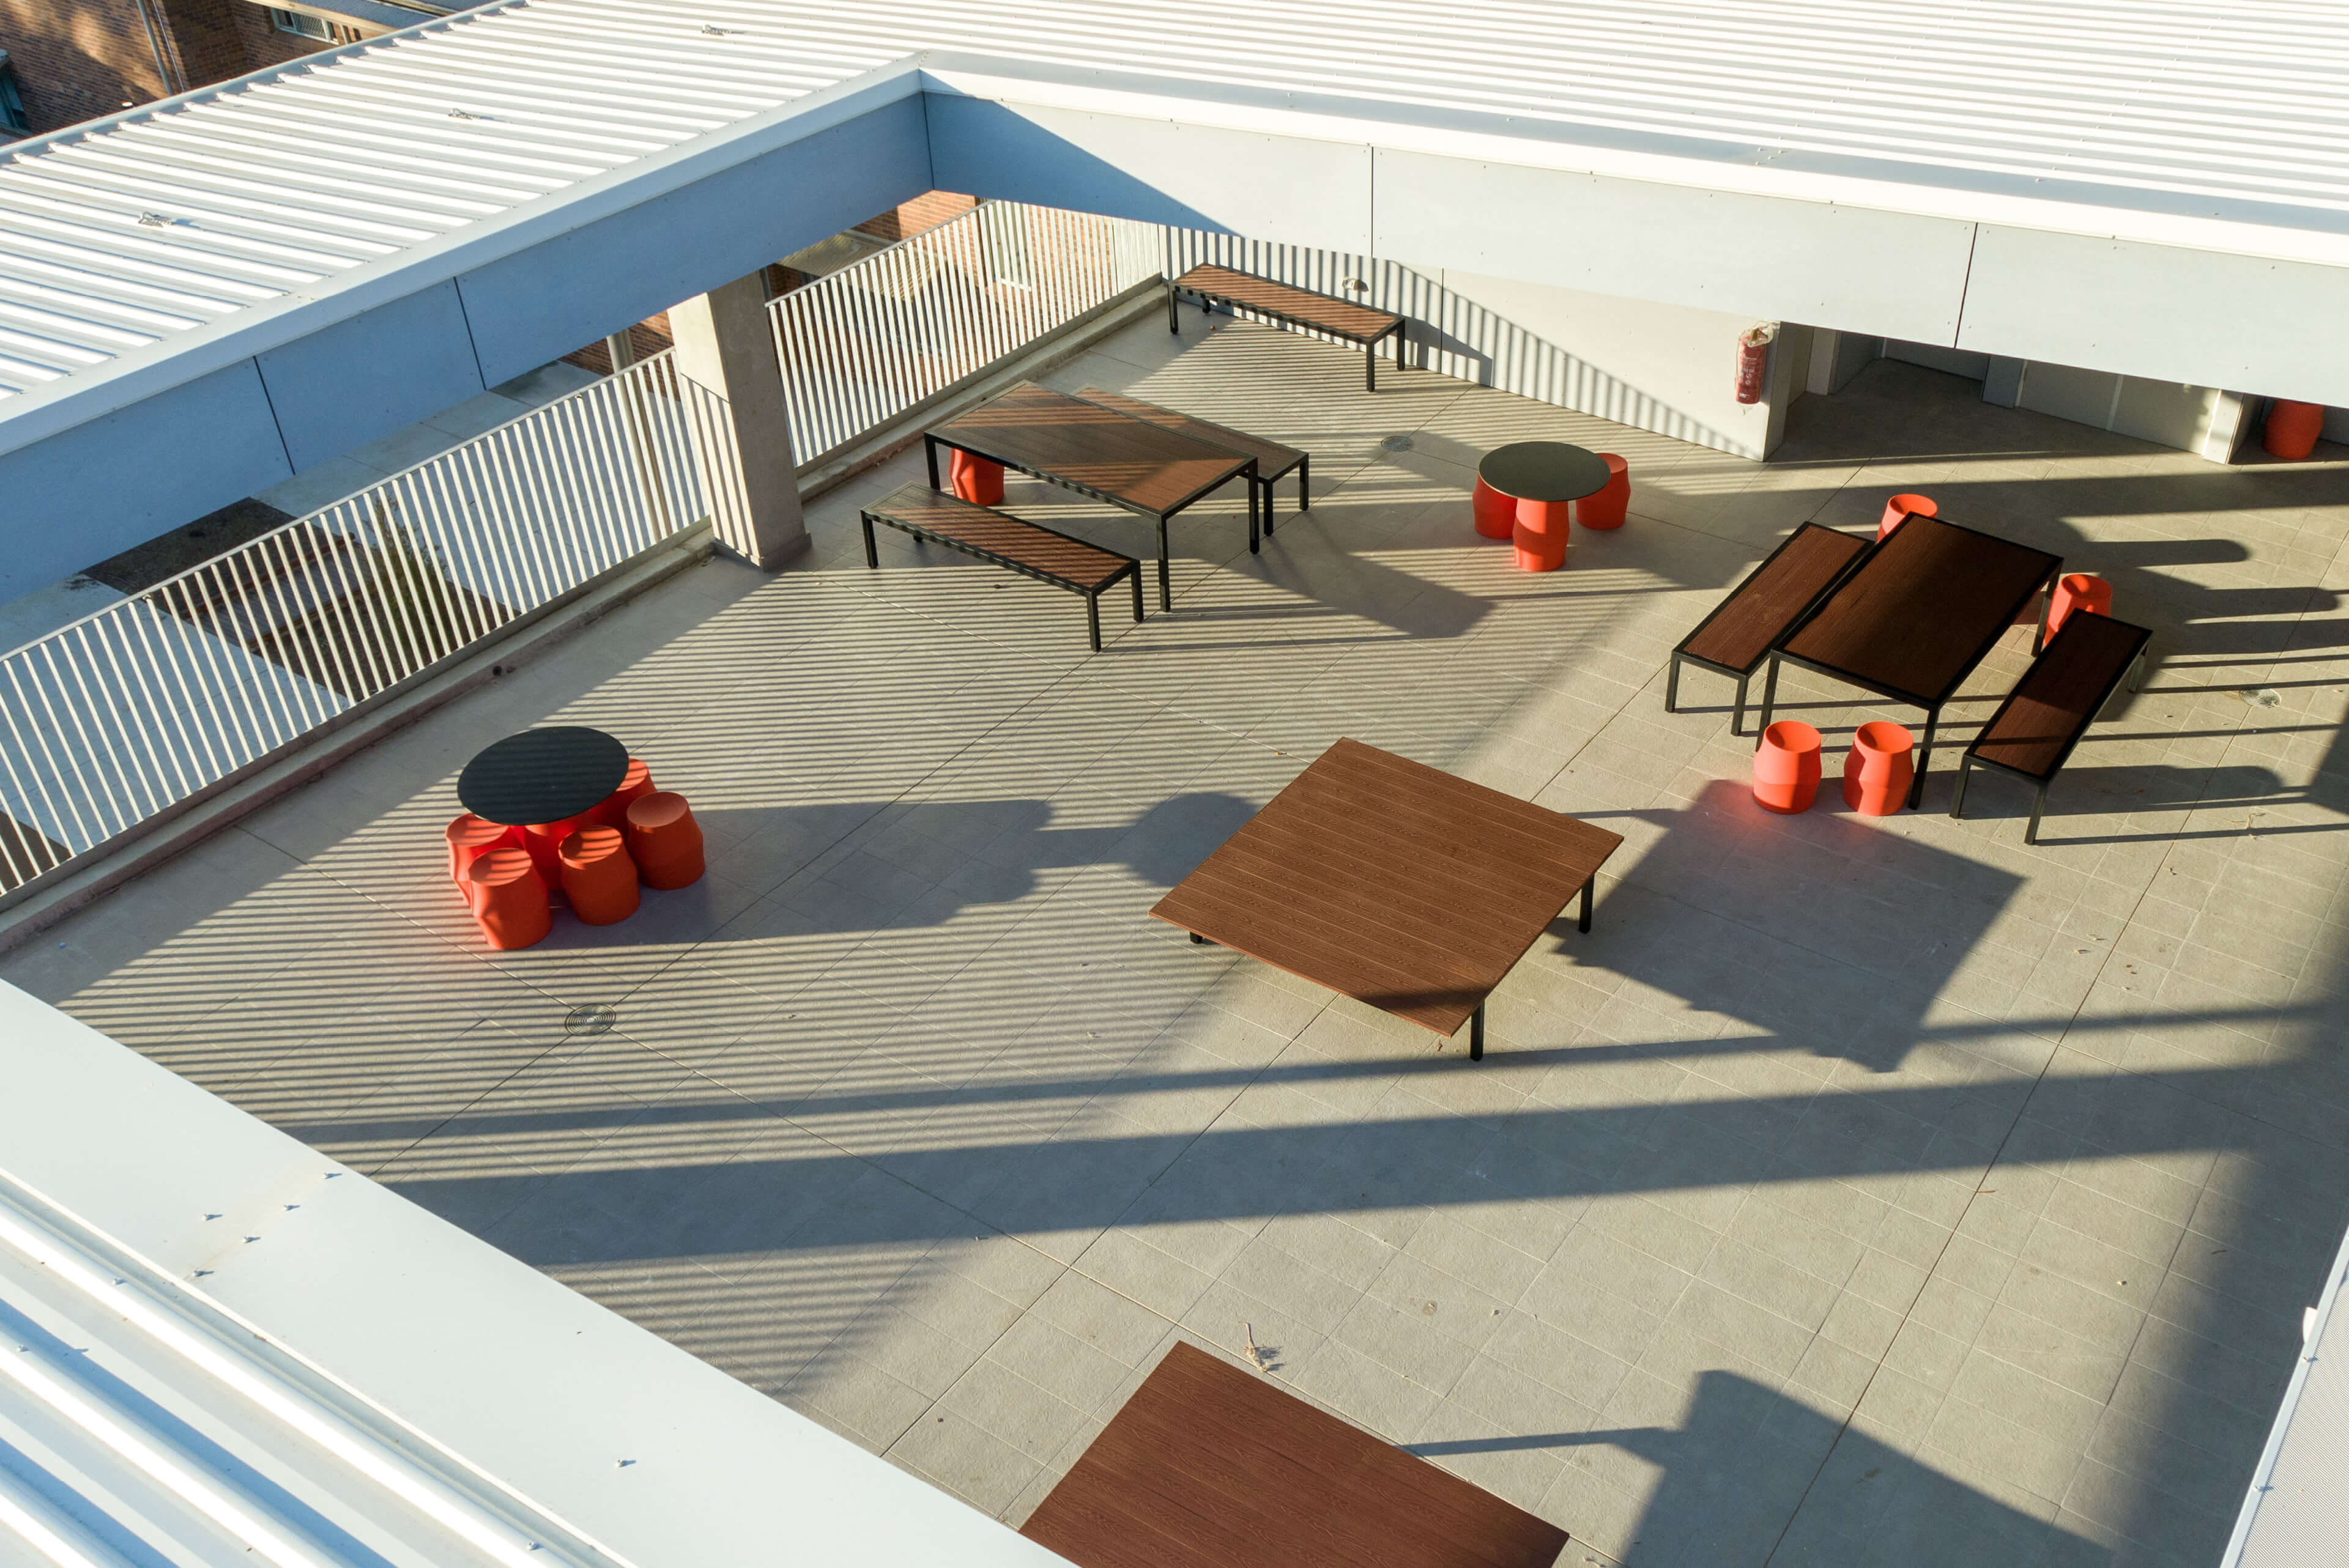 20 exterior rooftop picton high school development taylor construction education20